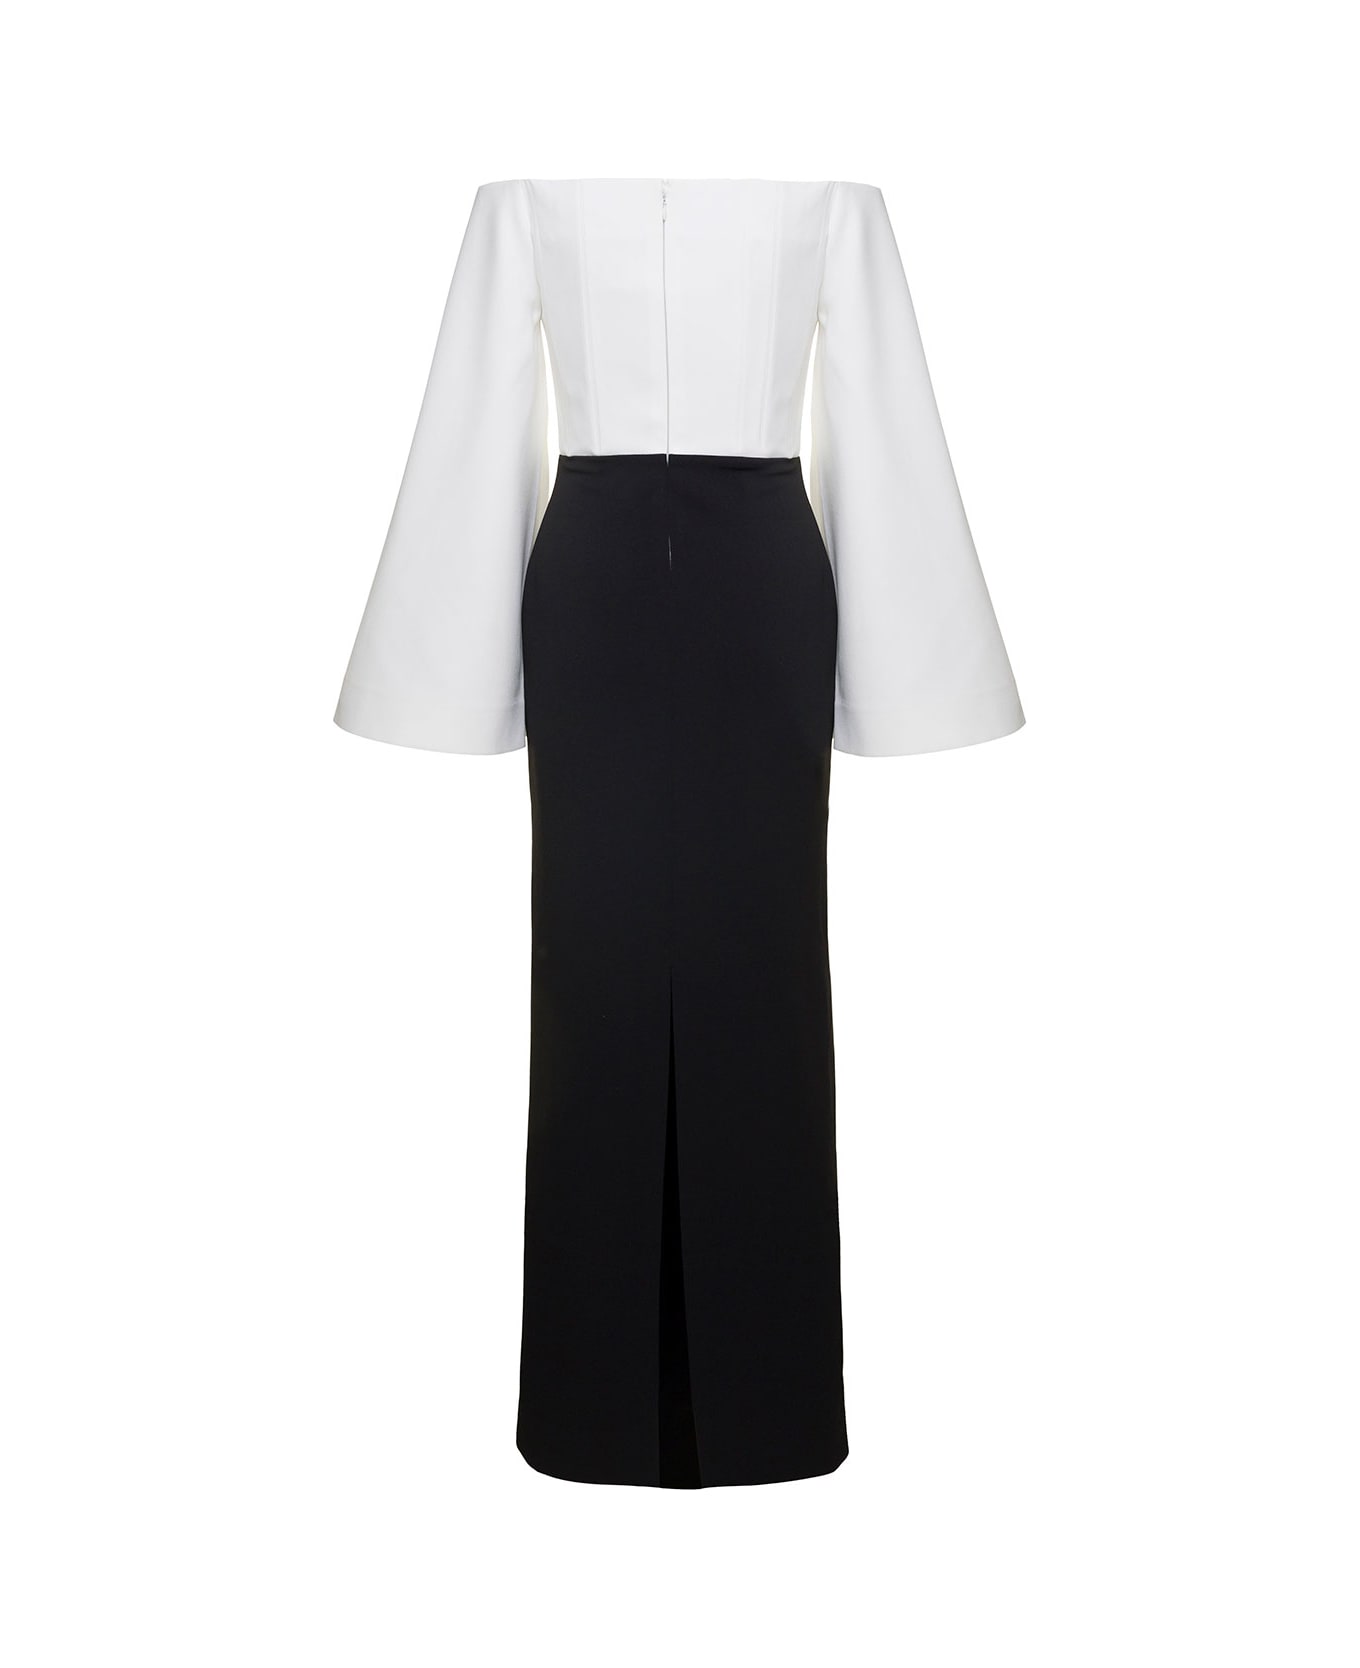 Solace London Eliana Off-shoulder Maxi Dress In Black And White Satin - Cream/black